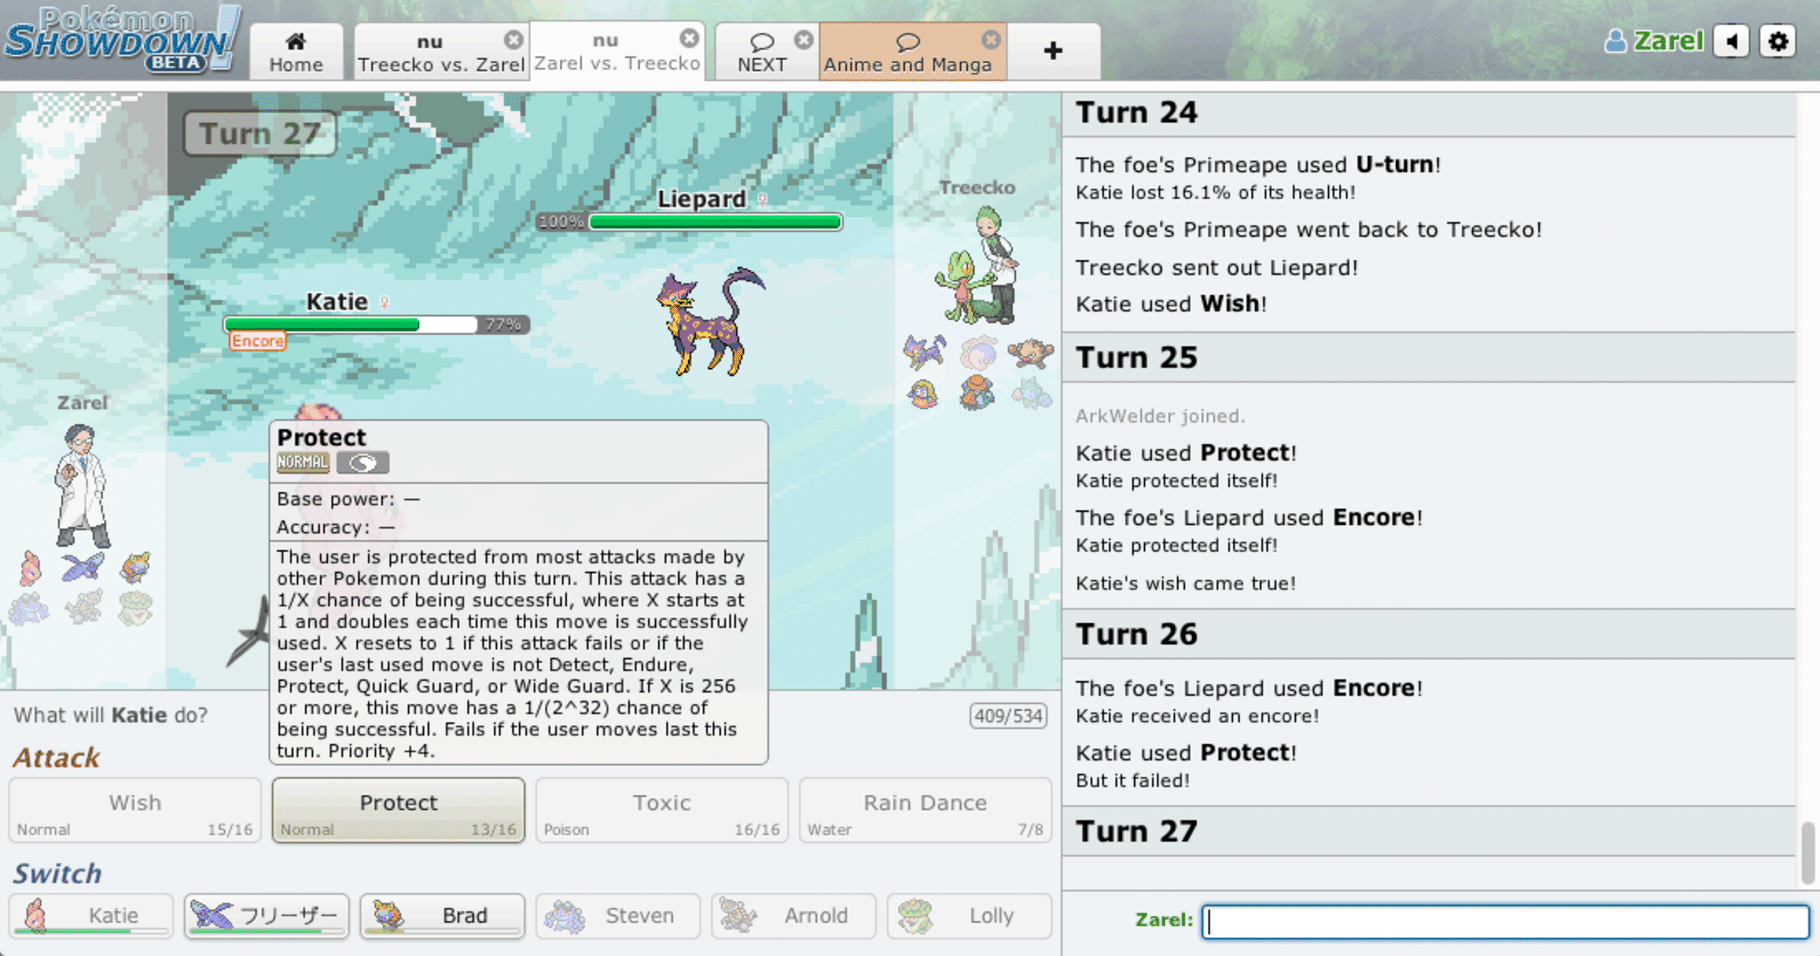 On Pokemon Showdown's teambuilder UI